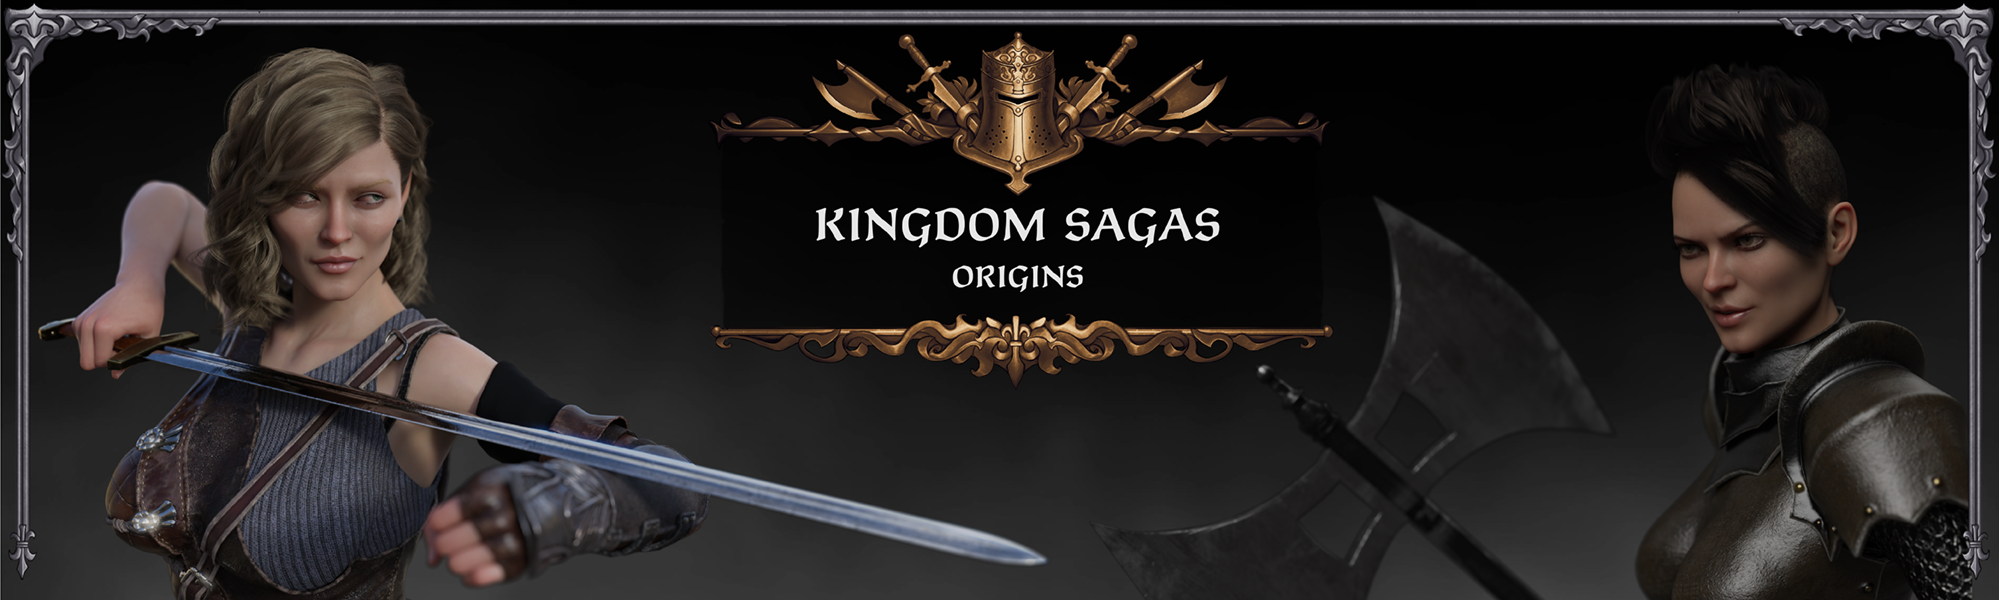 Kingdom Sagas